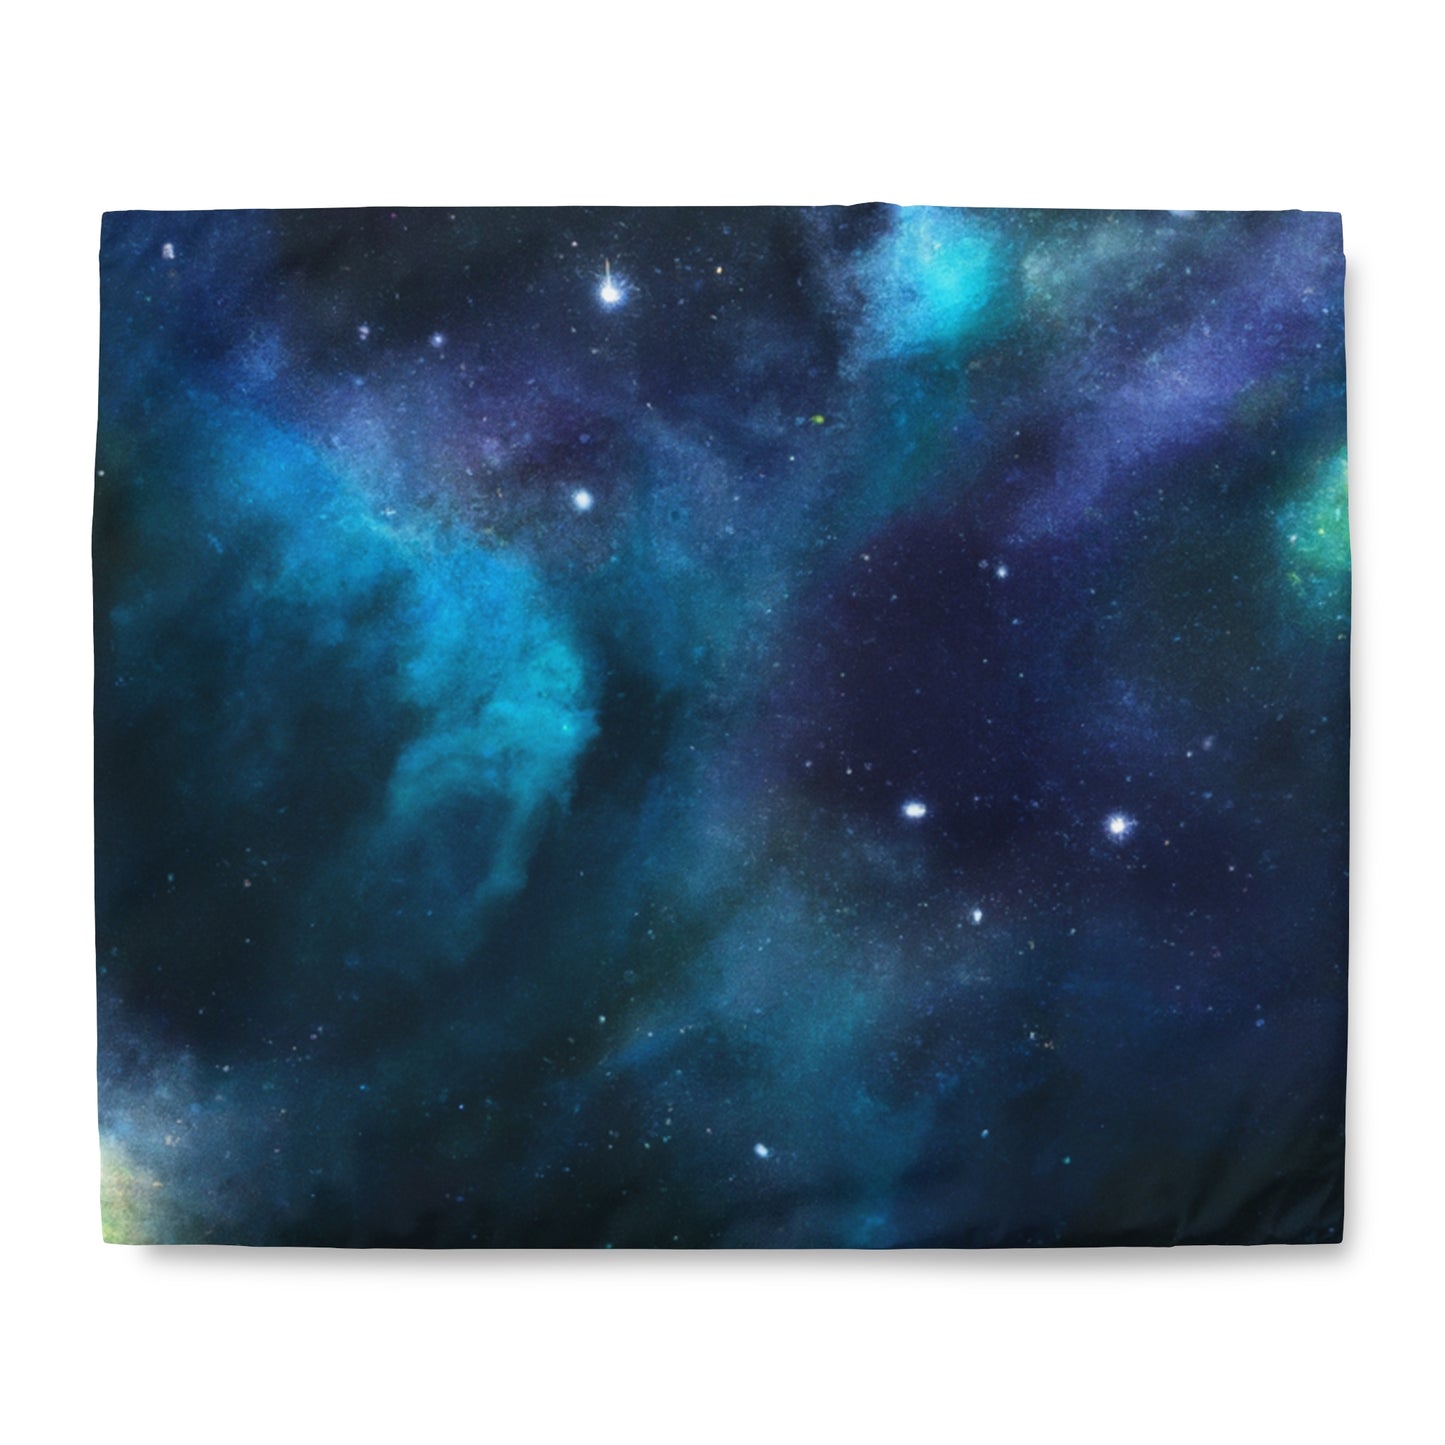 . 

Marilyn Dreamland - Astronomy Duvet Bed Cover